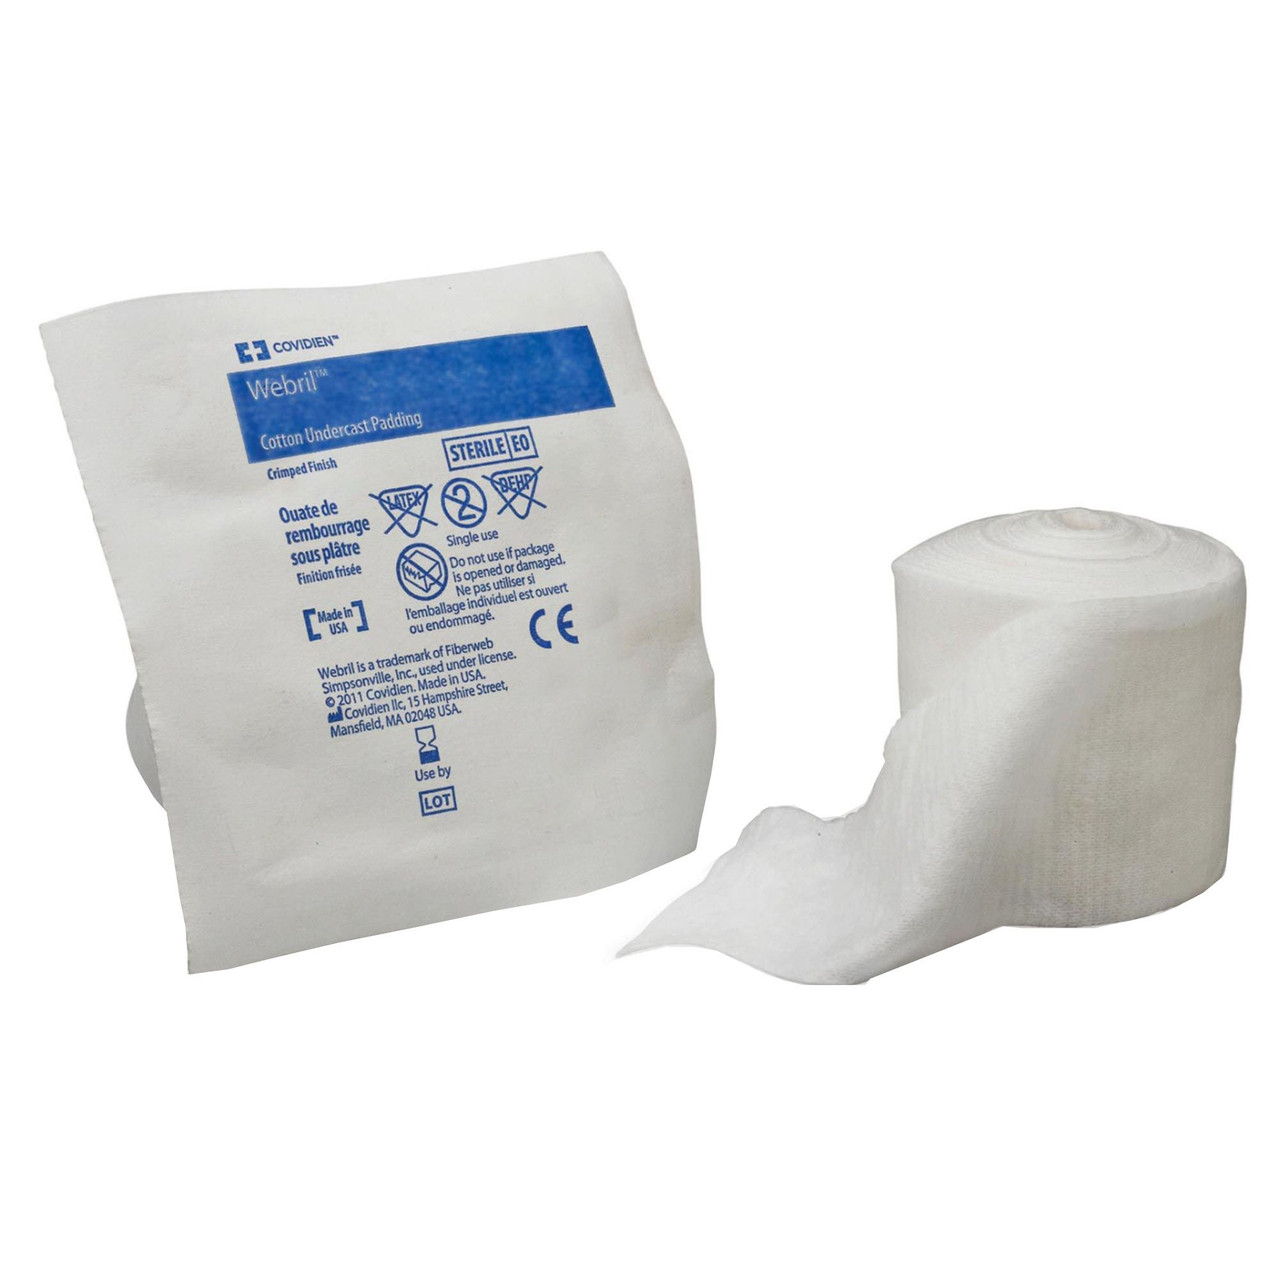 Covidien Webril 100% Cotton Undercast Padding, White - 2 Inch x 4 Yard